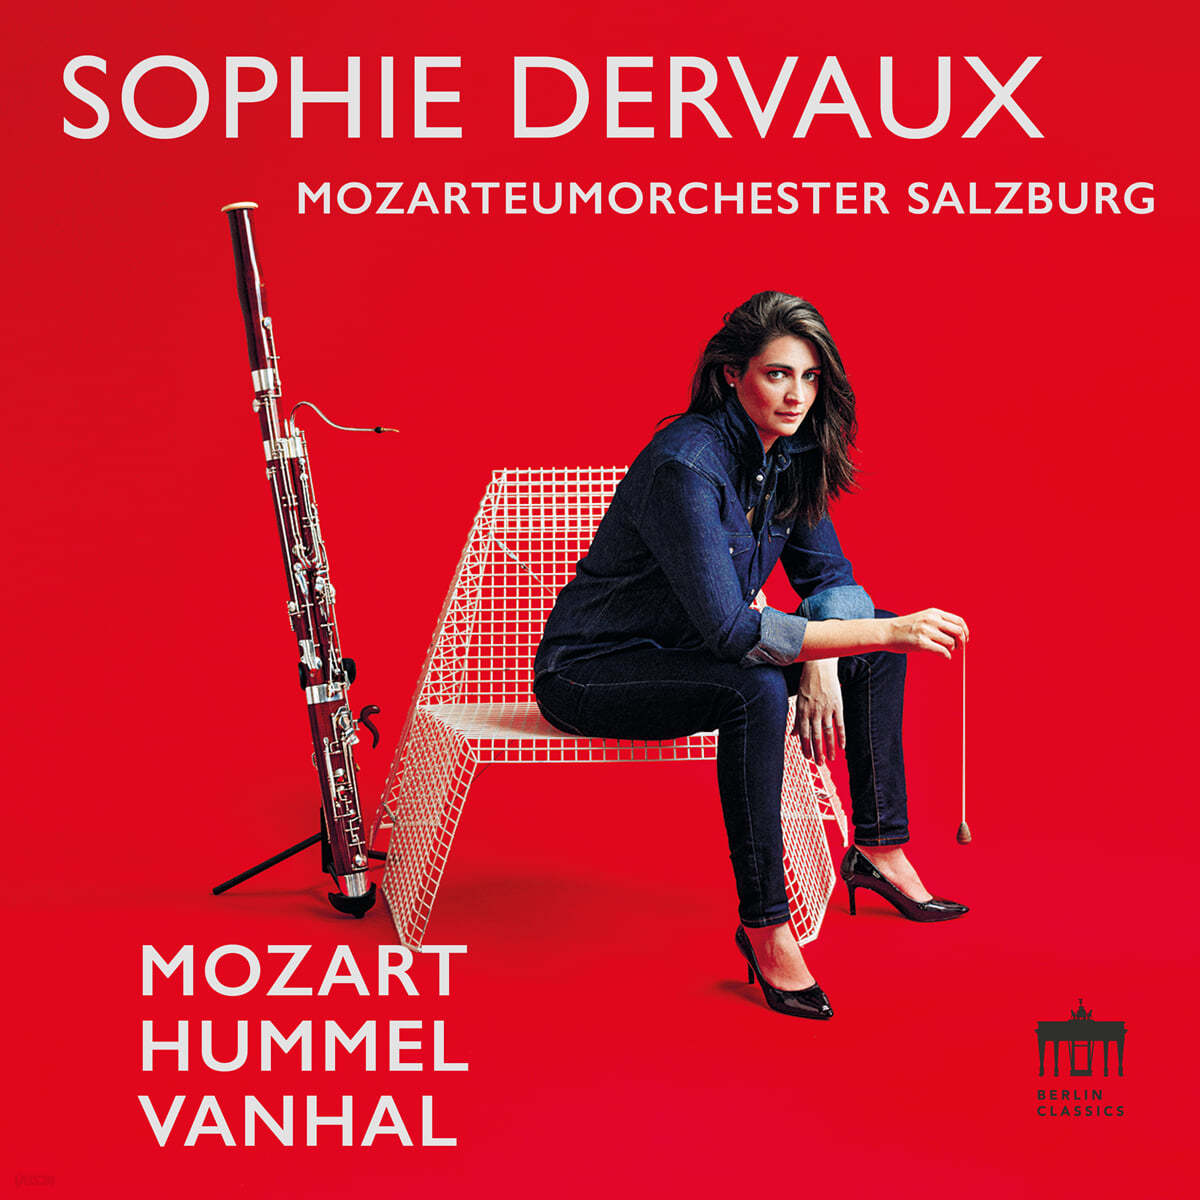 Sophie Dervaux 모차르트 / 훔멜 / 반할: 바순 협주곡 (Mozart / Hummel / Vanhal: Bassoon Concertos)